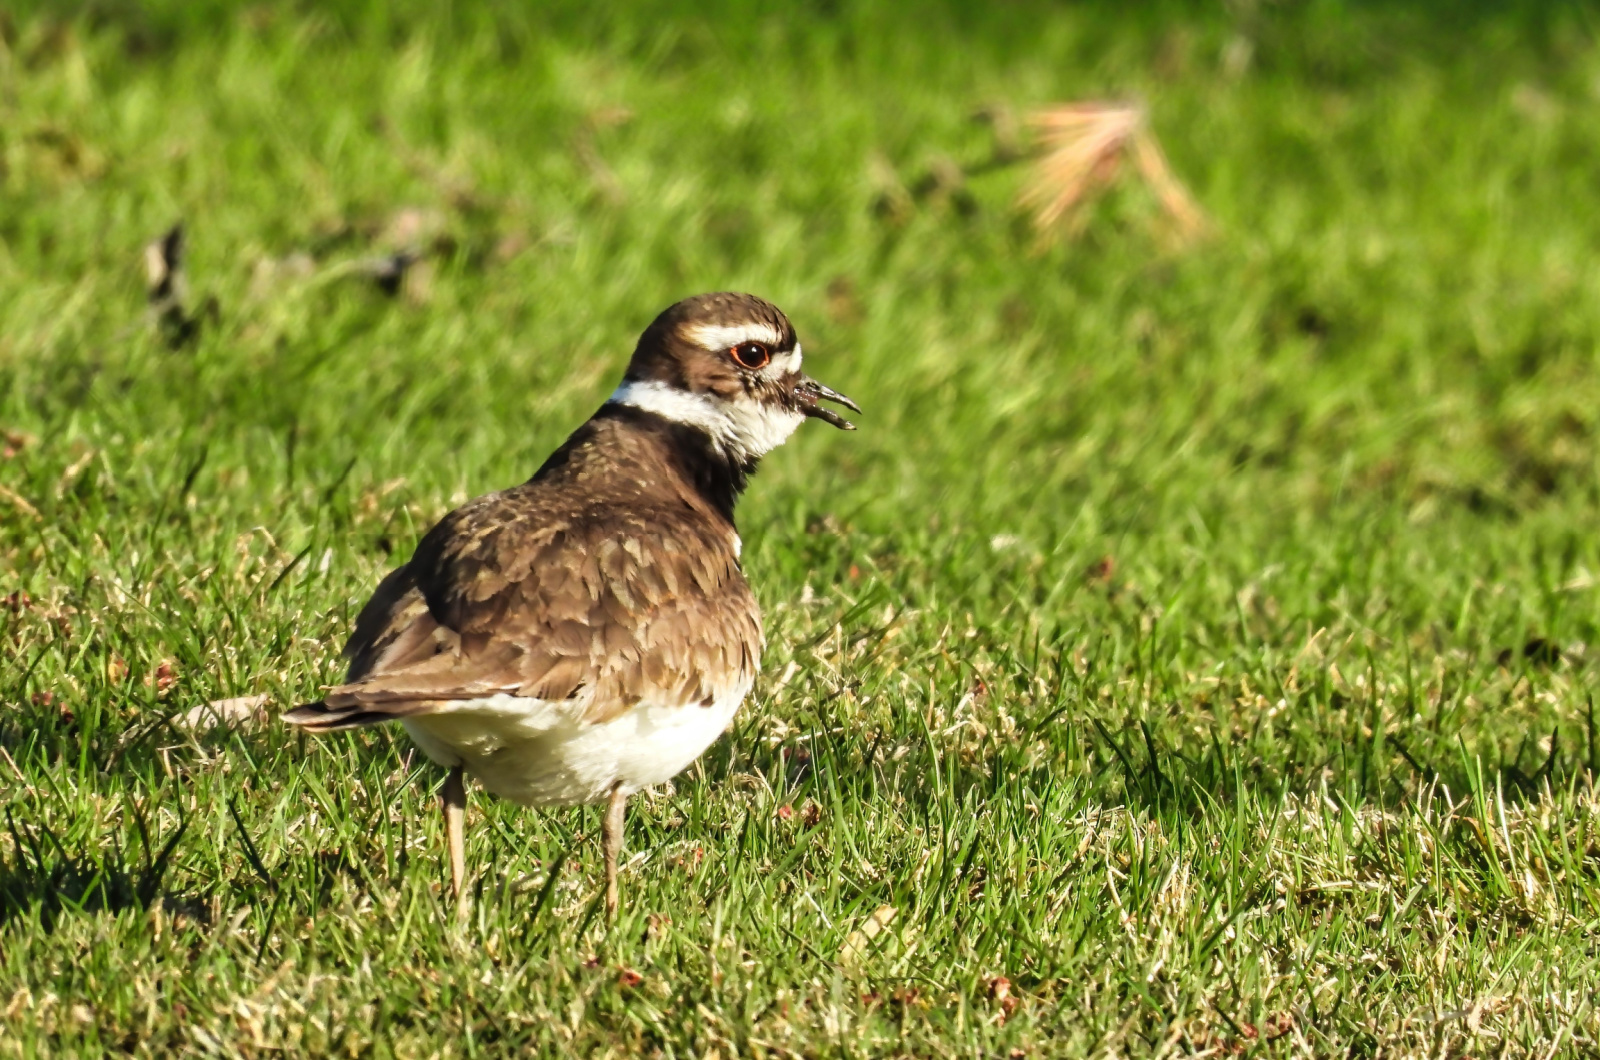 Killdeer bird on the grass